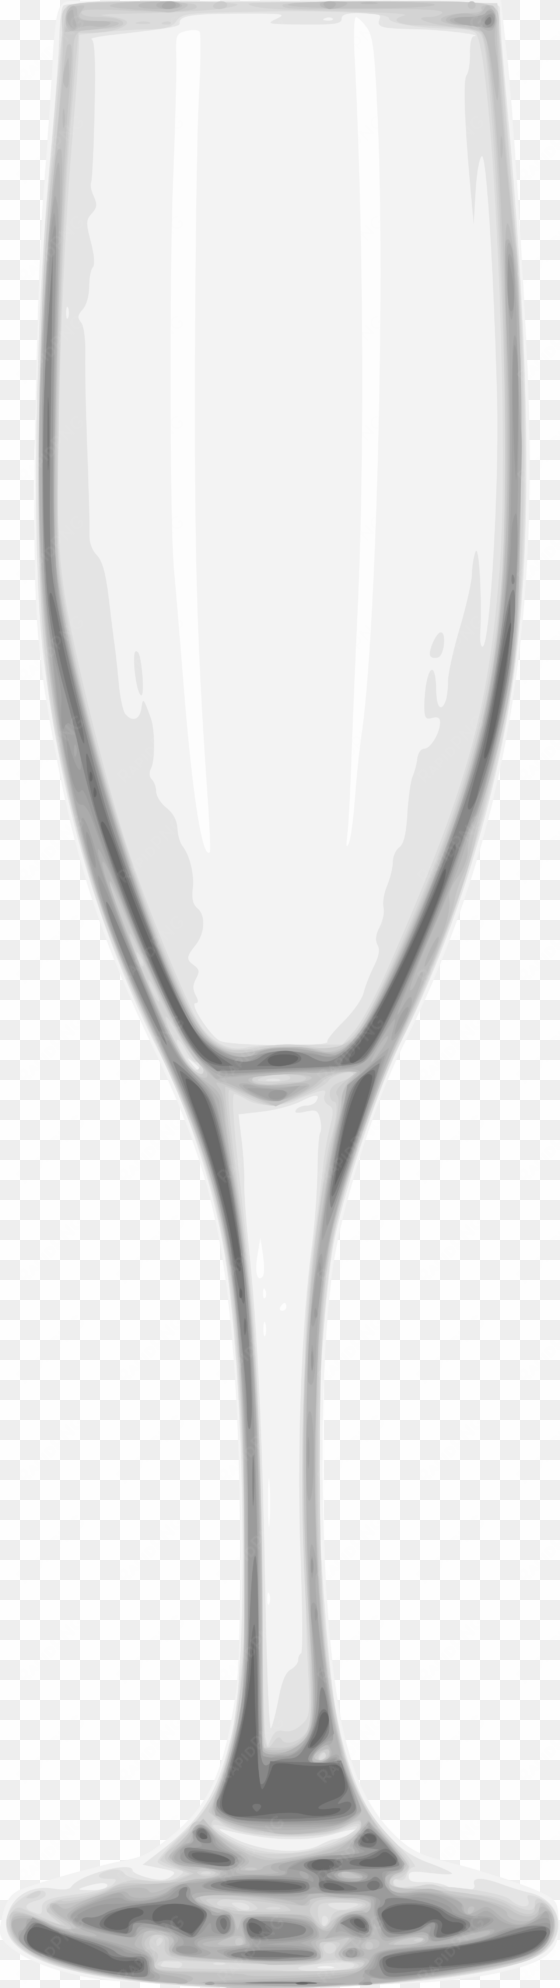 file glass svg wikimedia - transparent champagne glass png